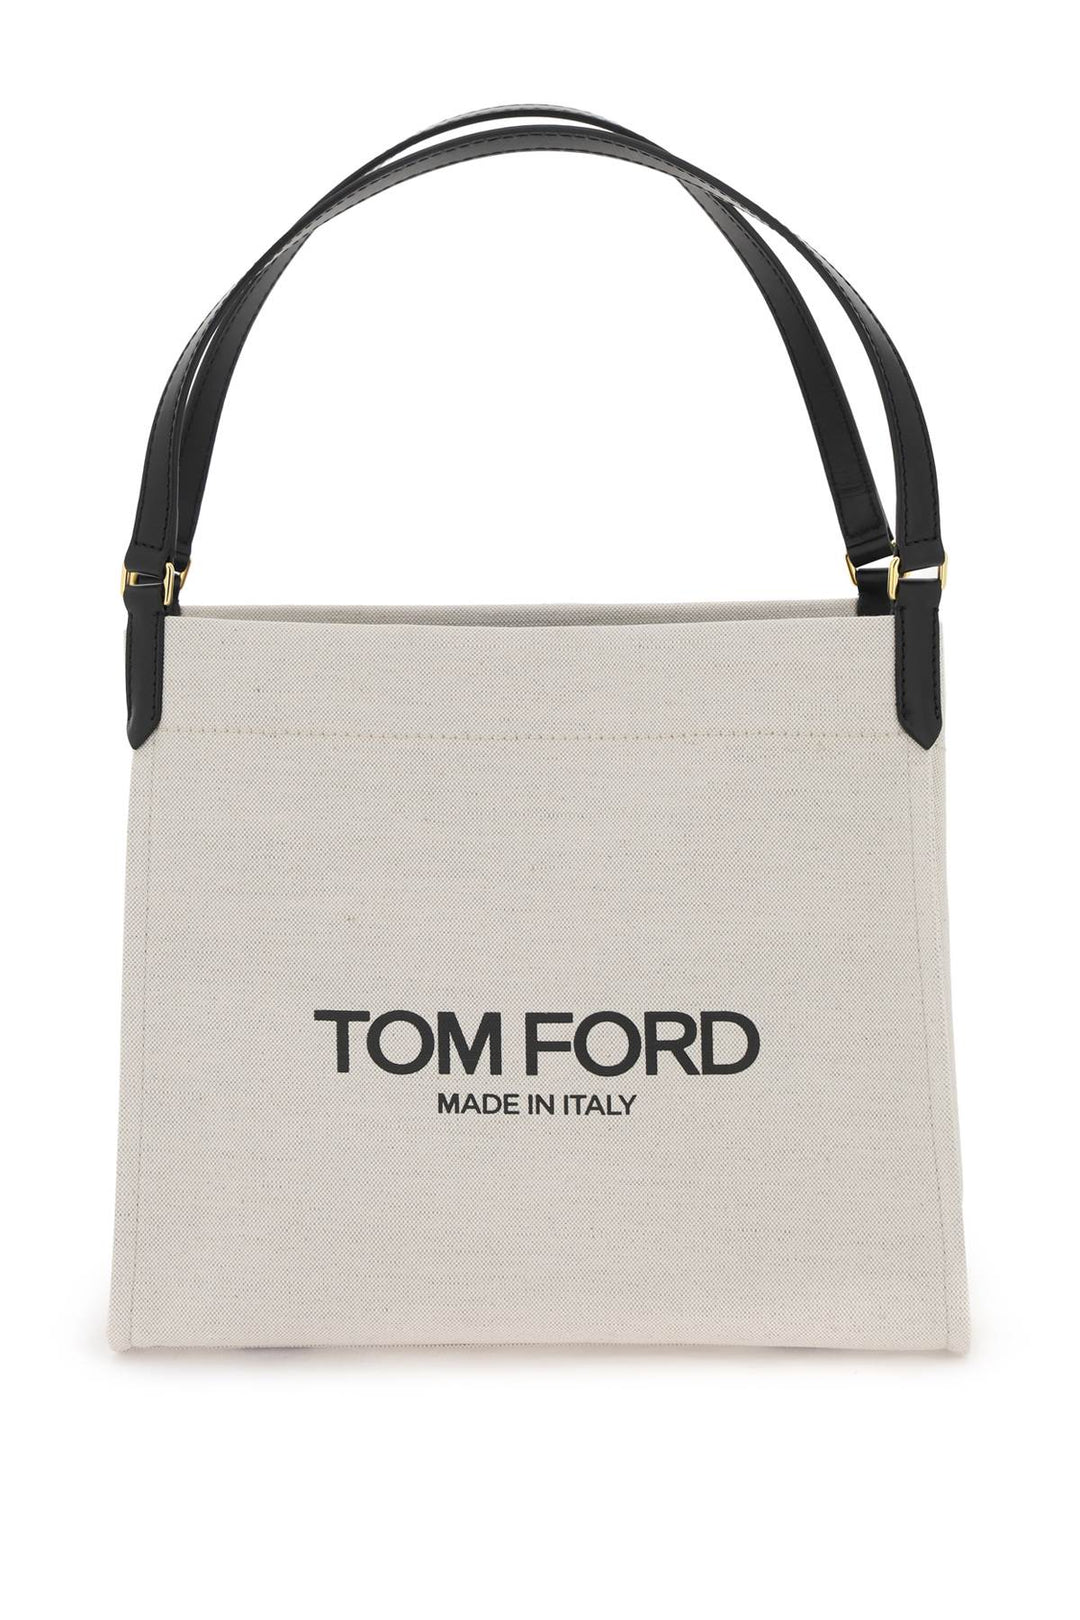 Tom Ford Amalfi Tote Bag   Nero